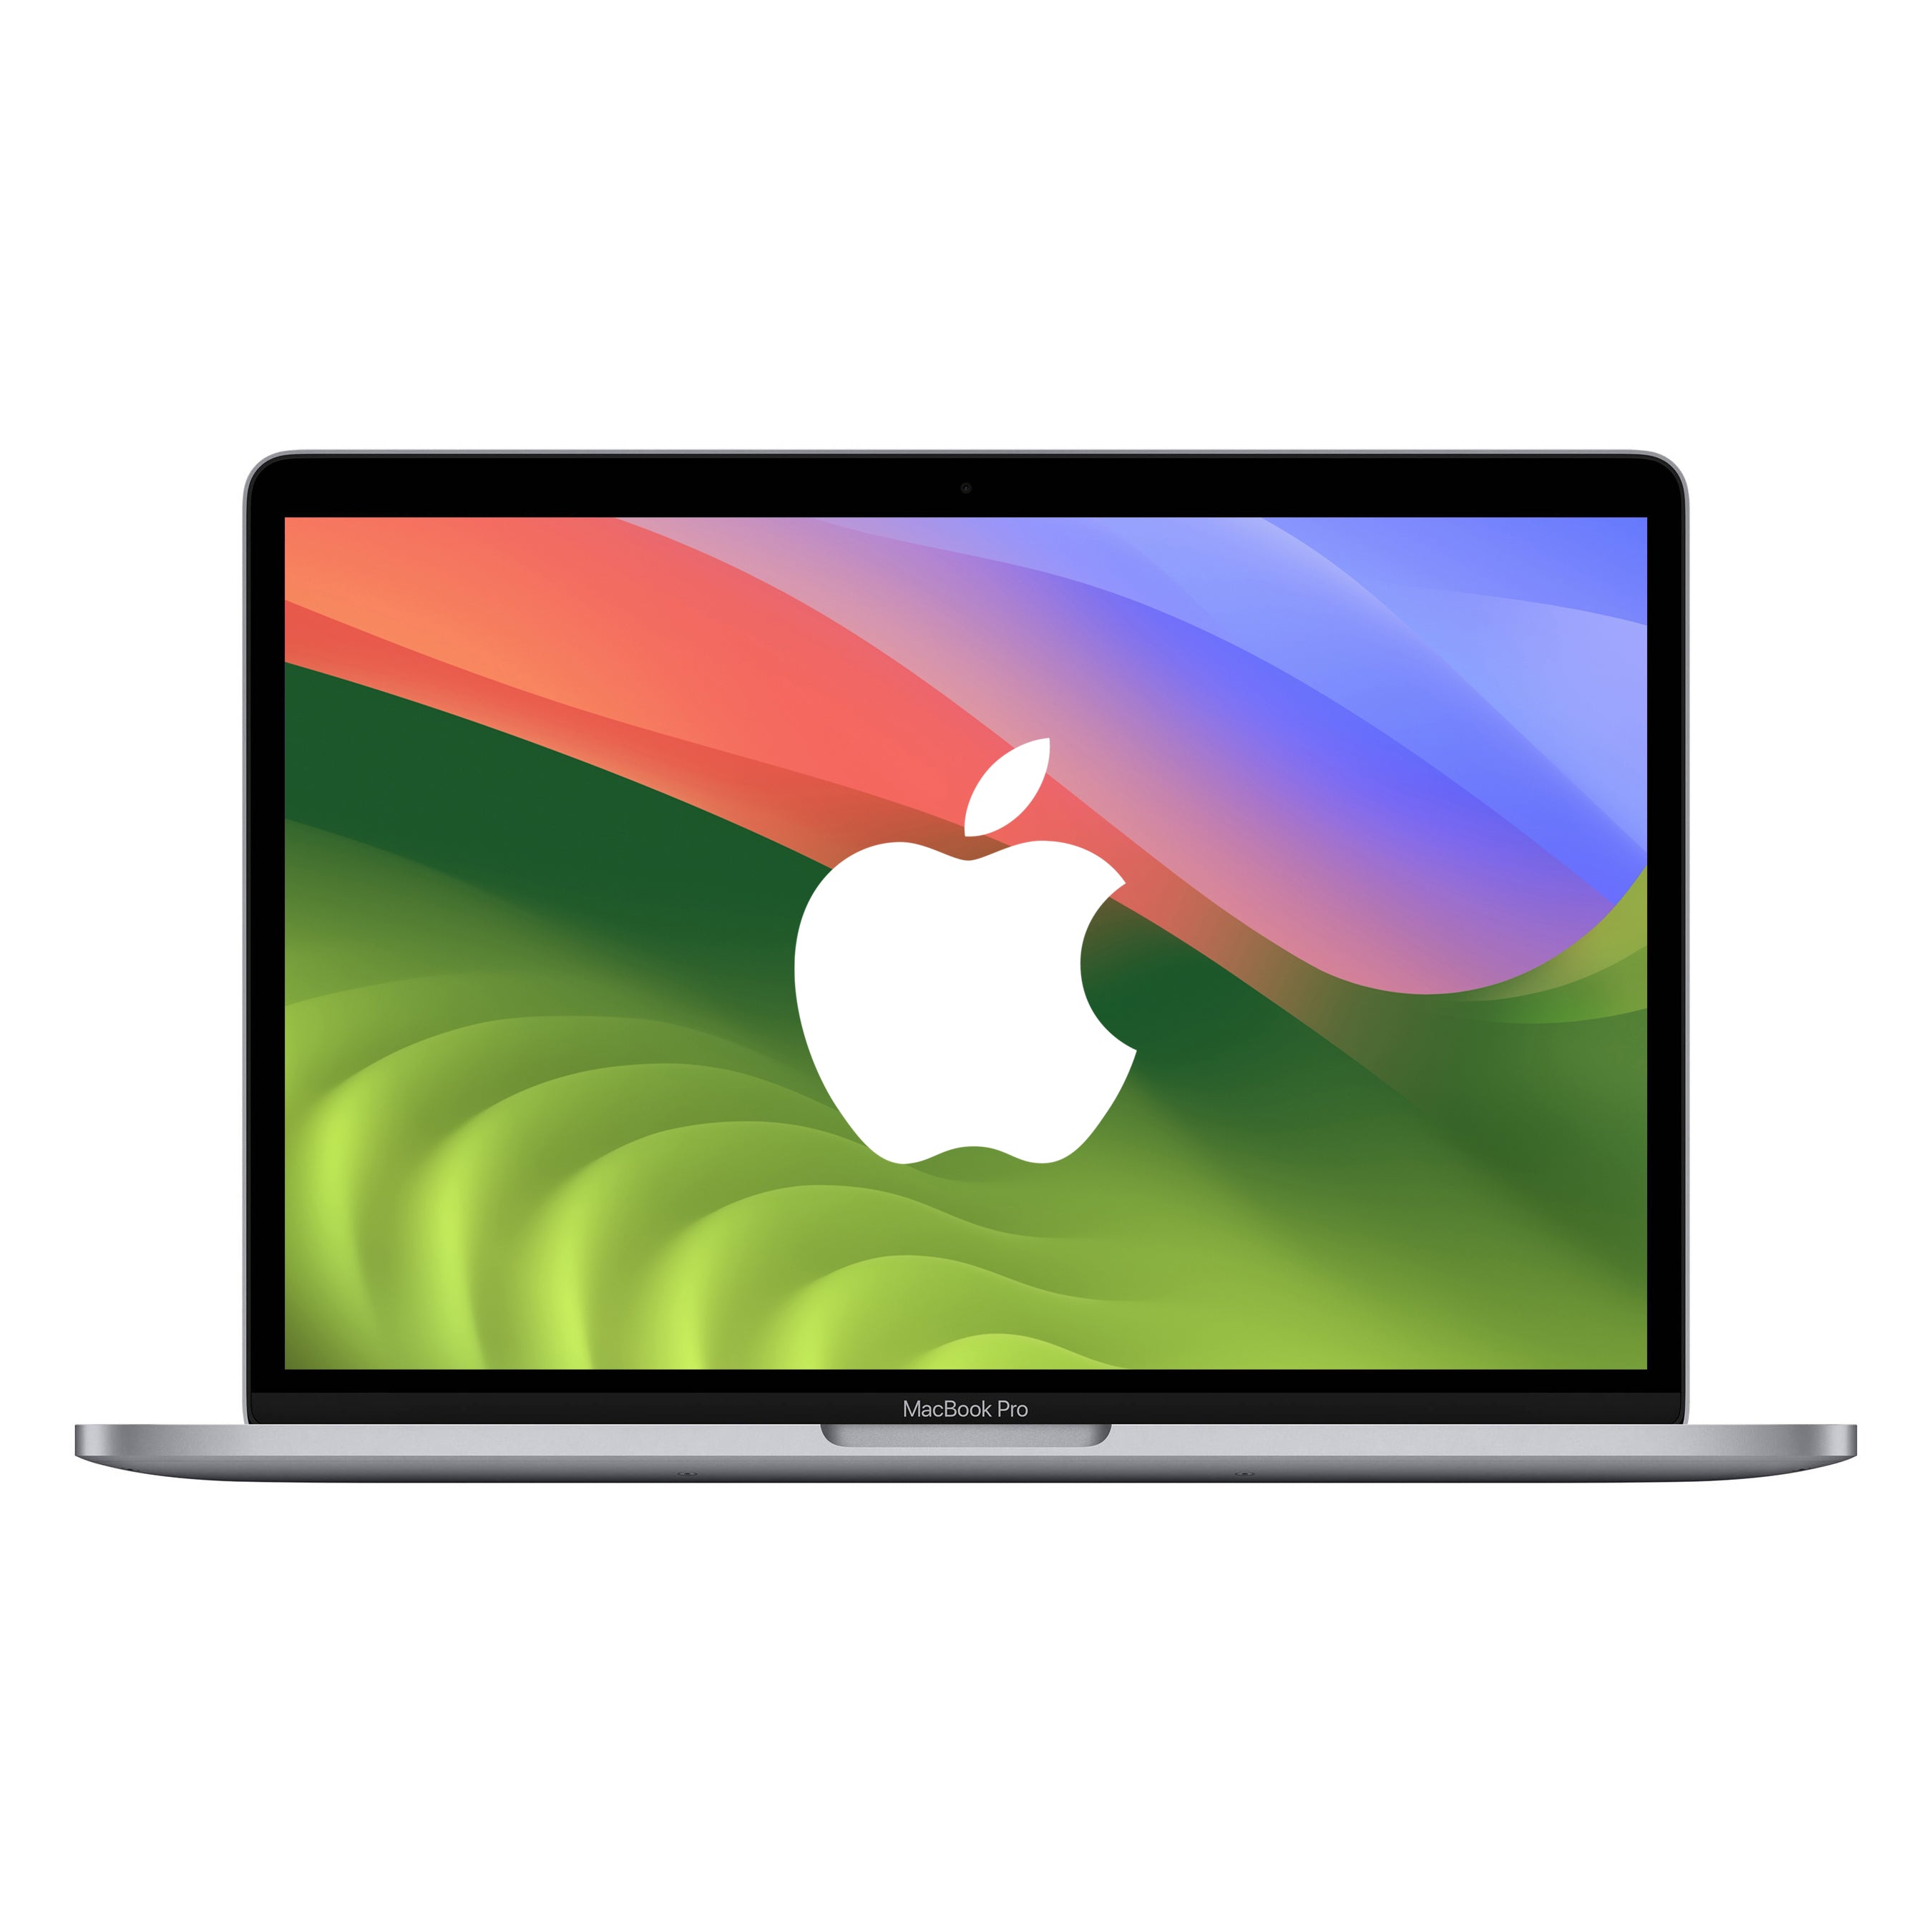 Apple MacBook Pro Laptop Offers (Brand New)